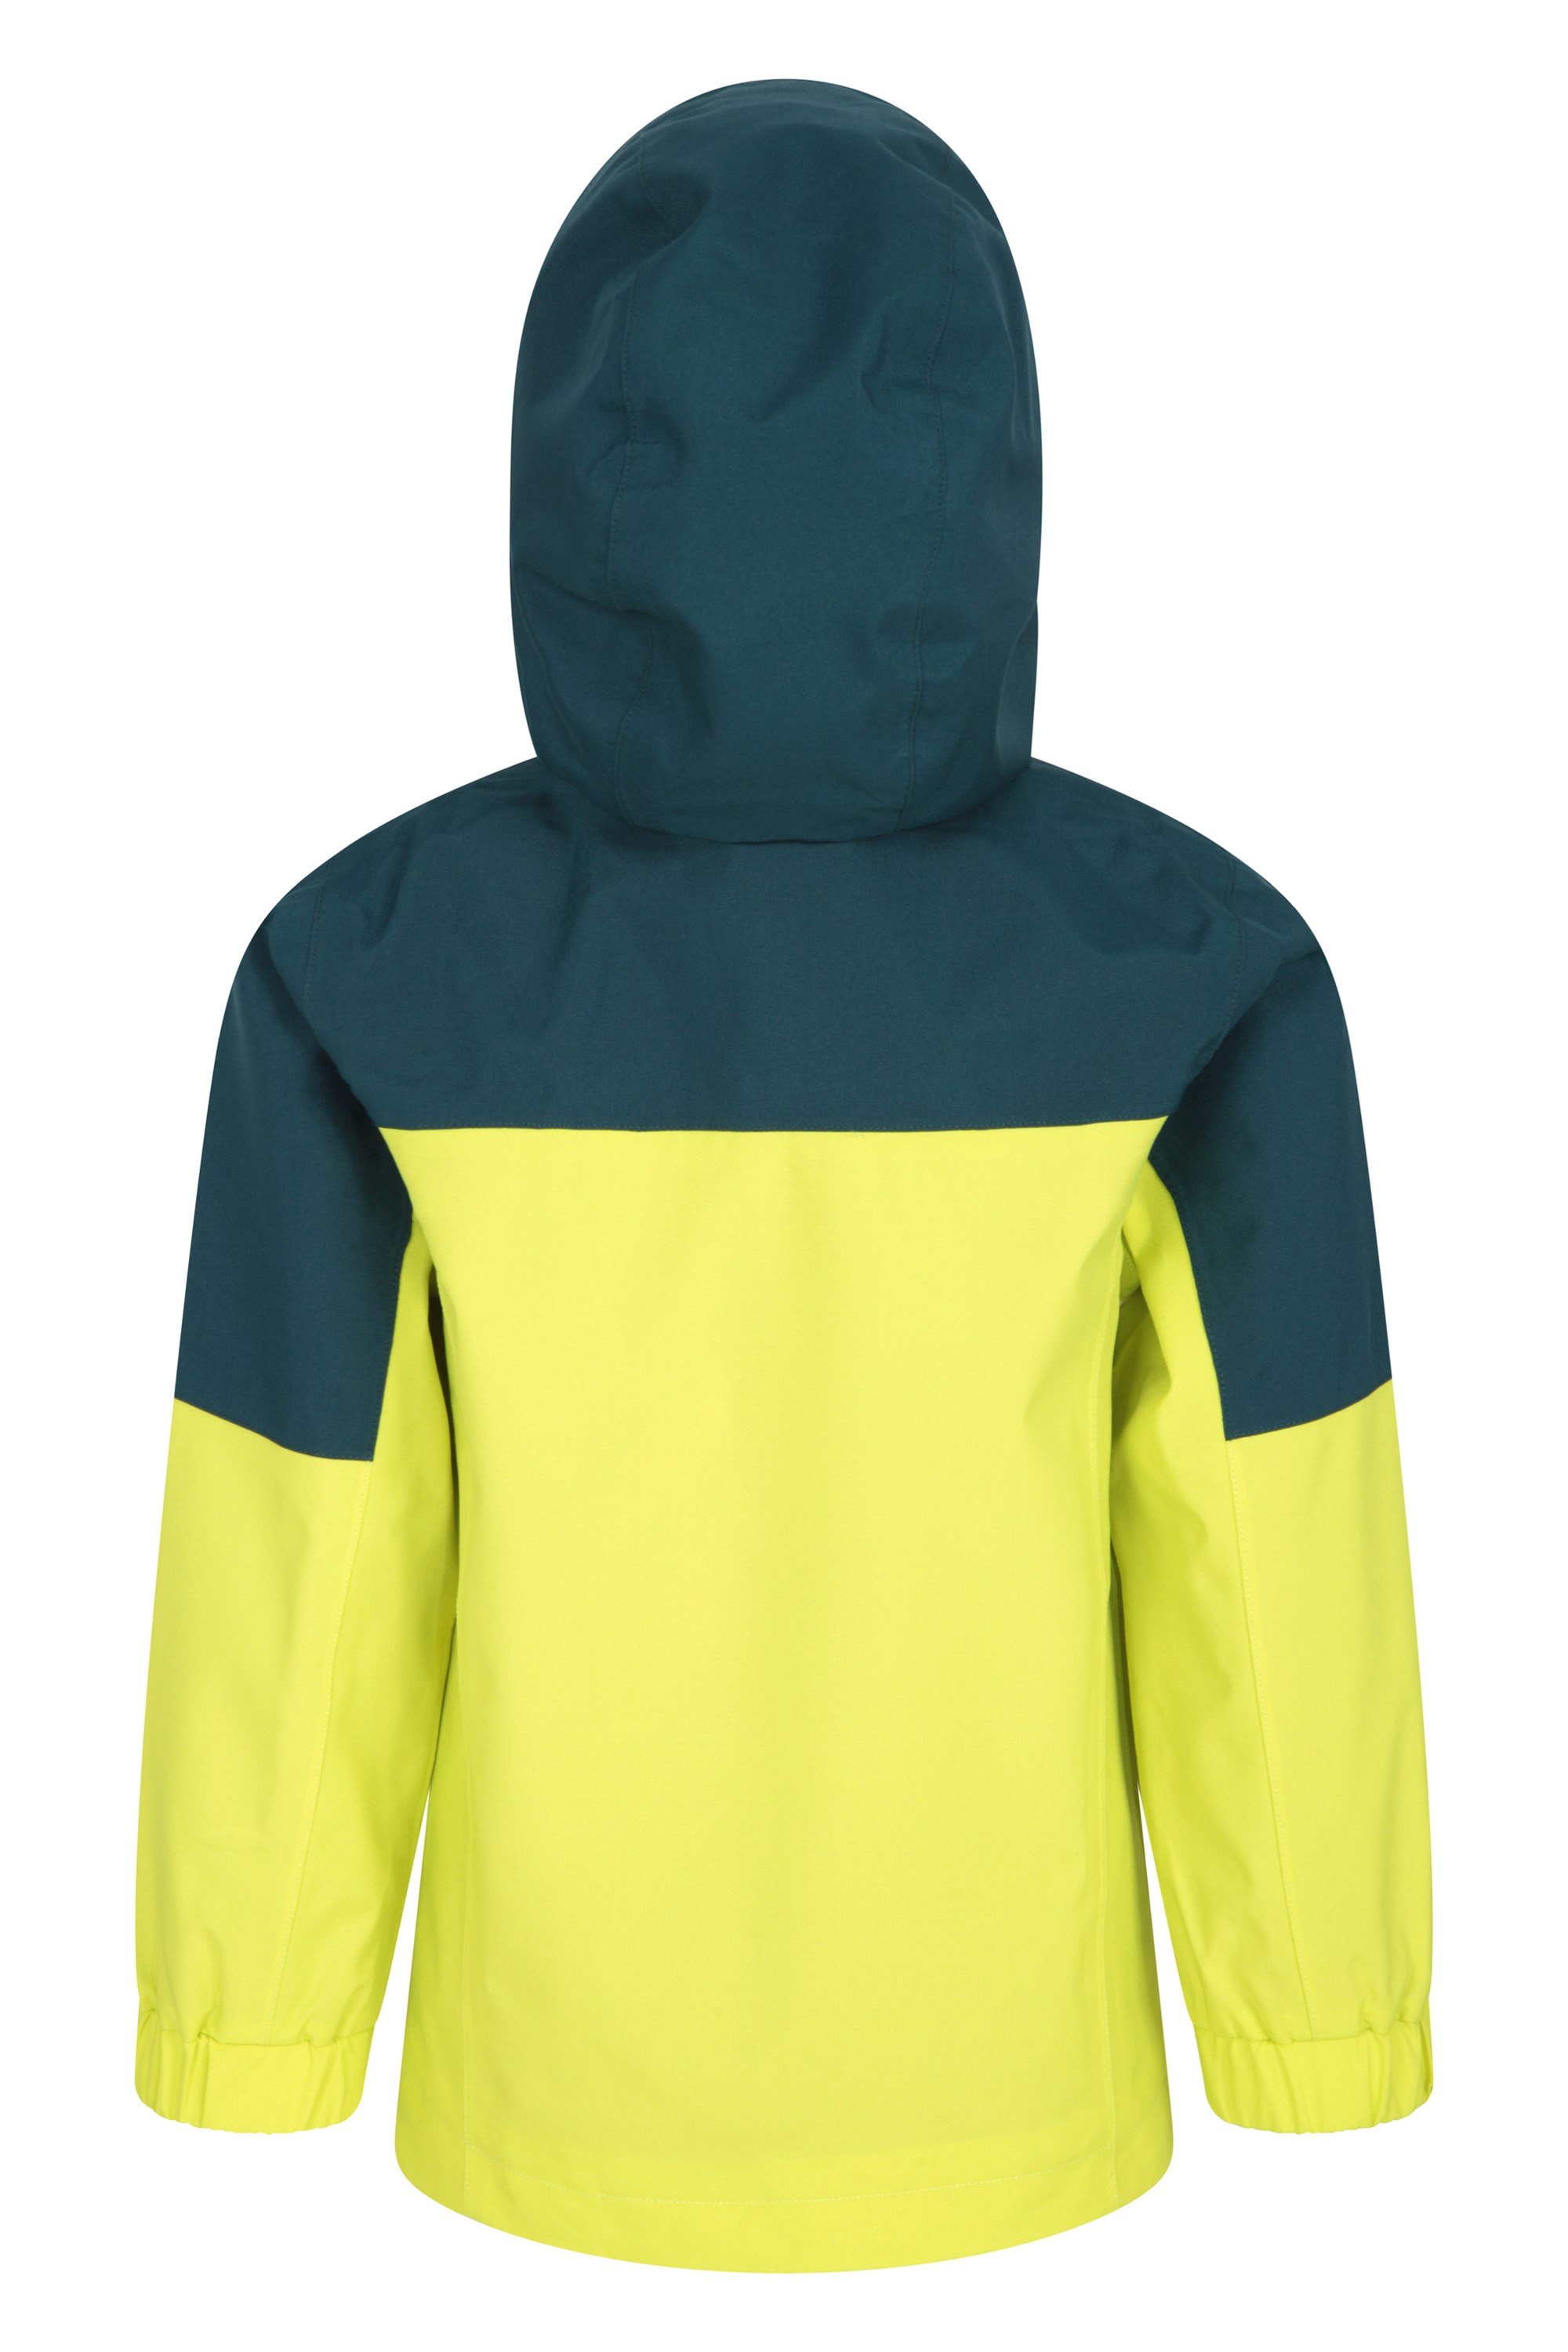 Breathable Mountain Warehouse Meteor Kids Waterproof Rain Jacket